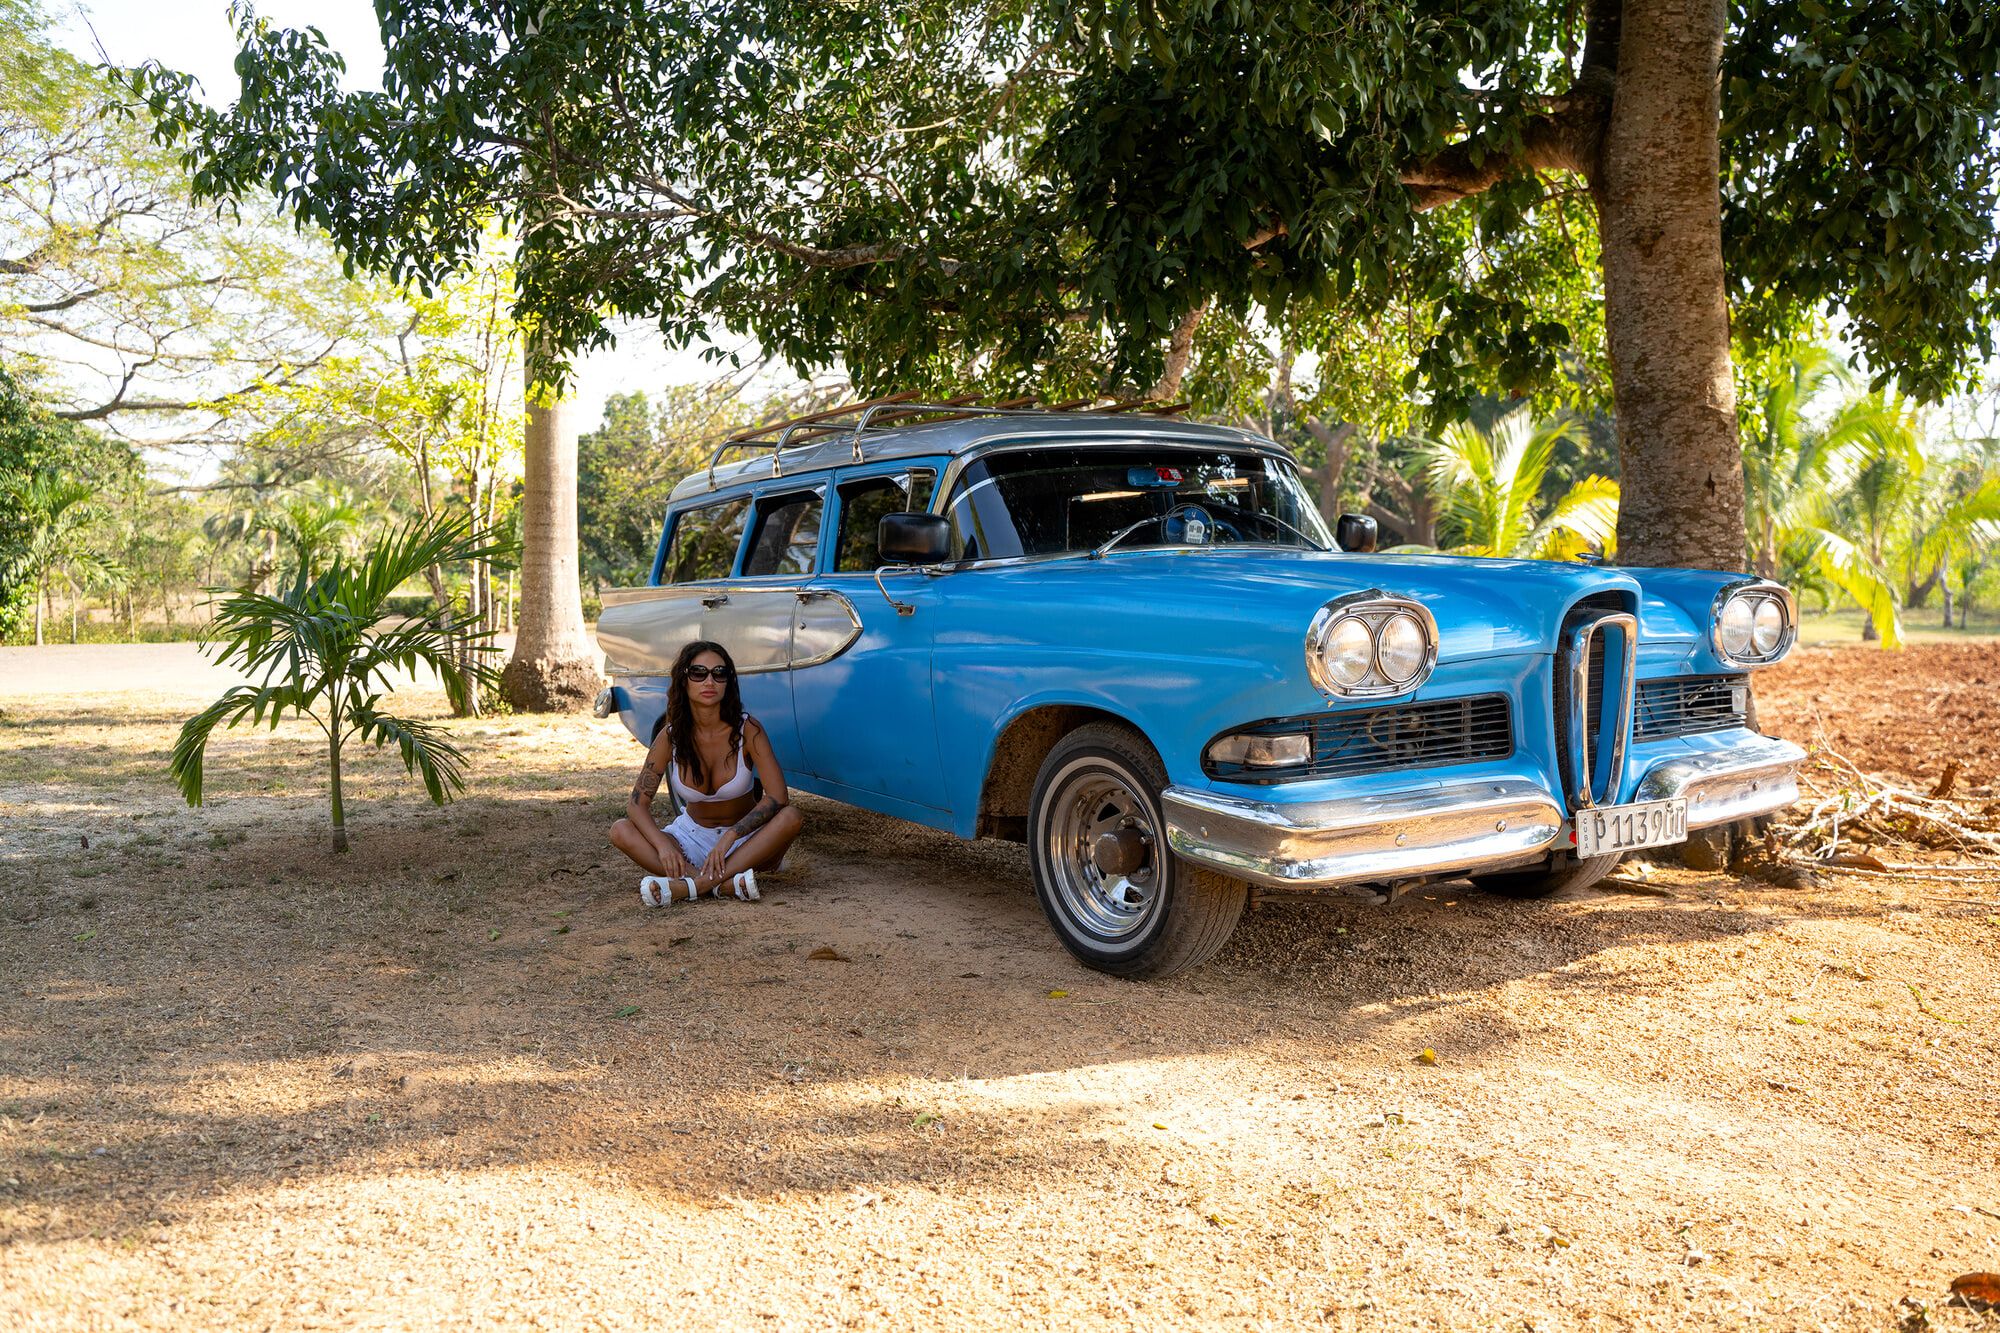 Monika Fox In White Next To A Vintage Car In Cuba